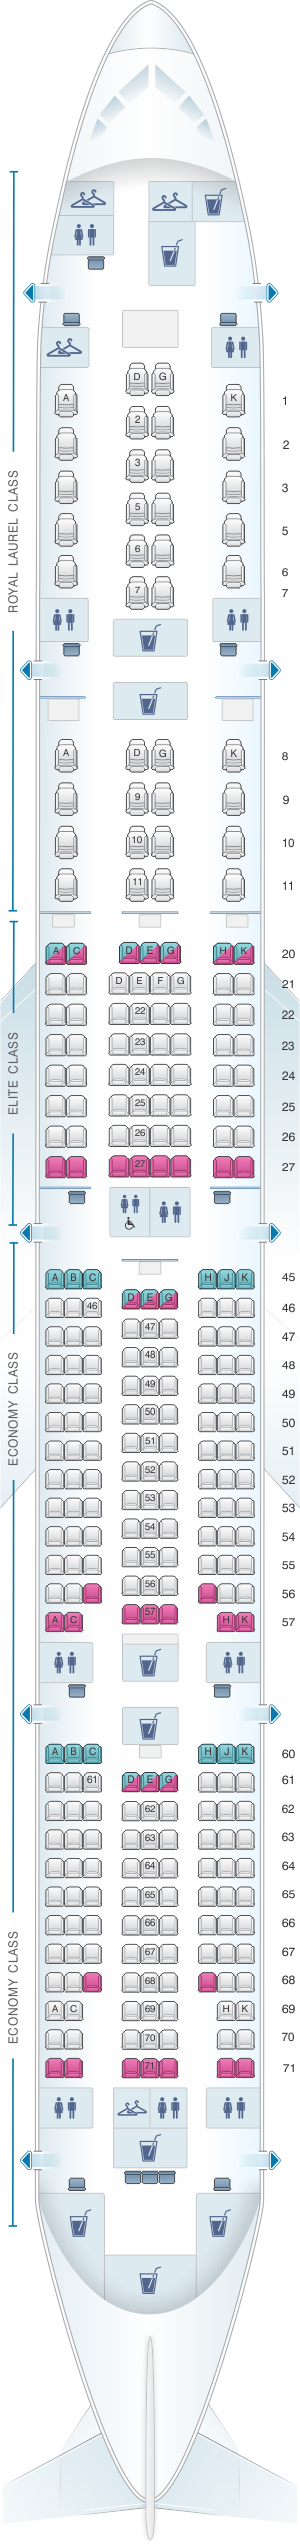 Seat map for EVA Air Boeing B777 300ER 313PAX